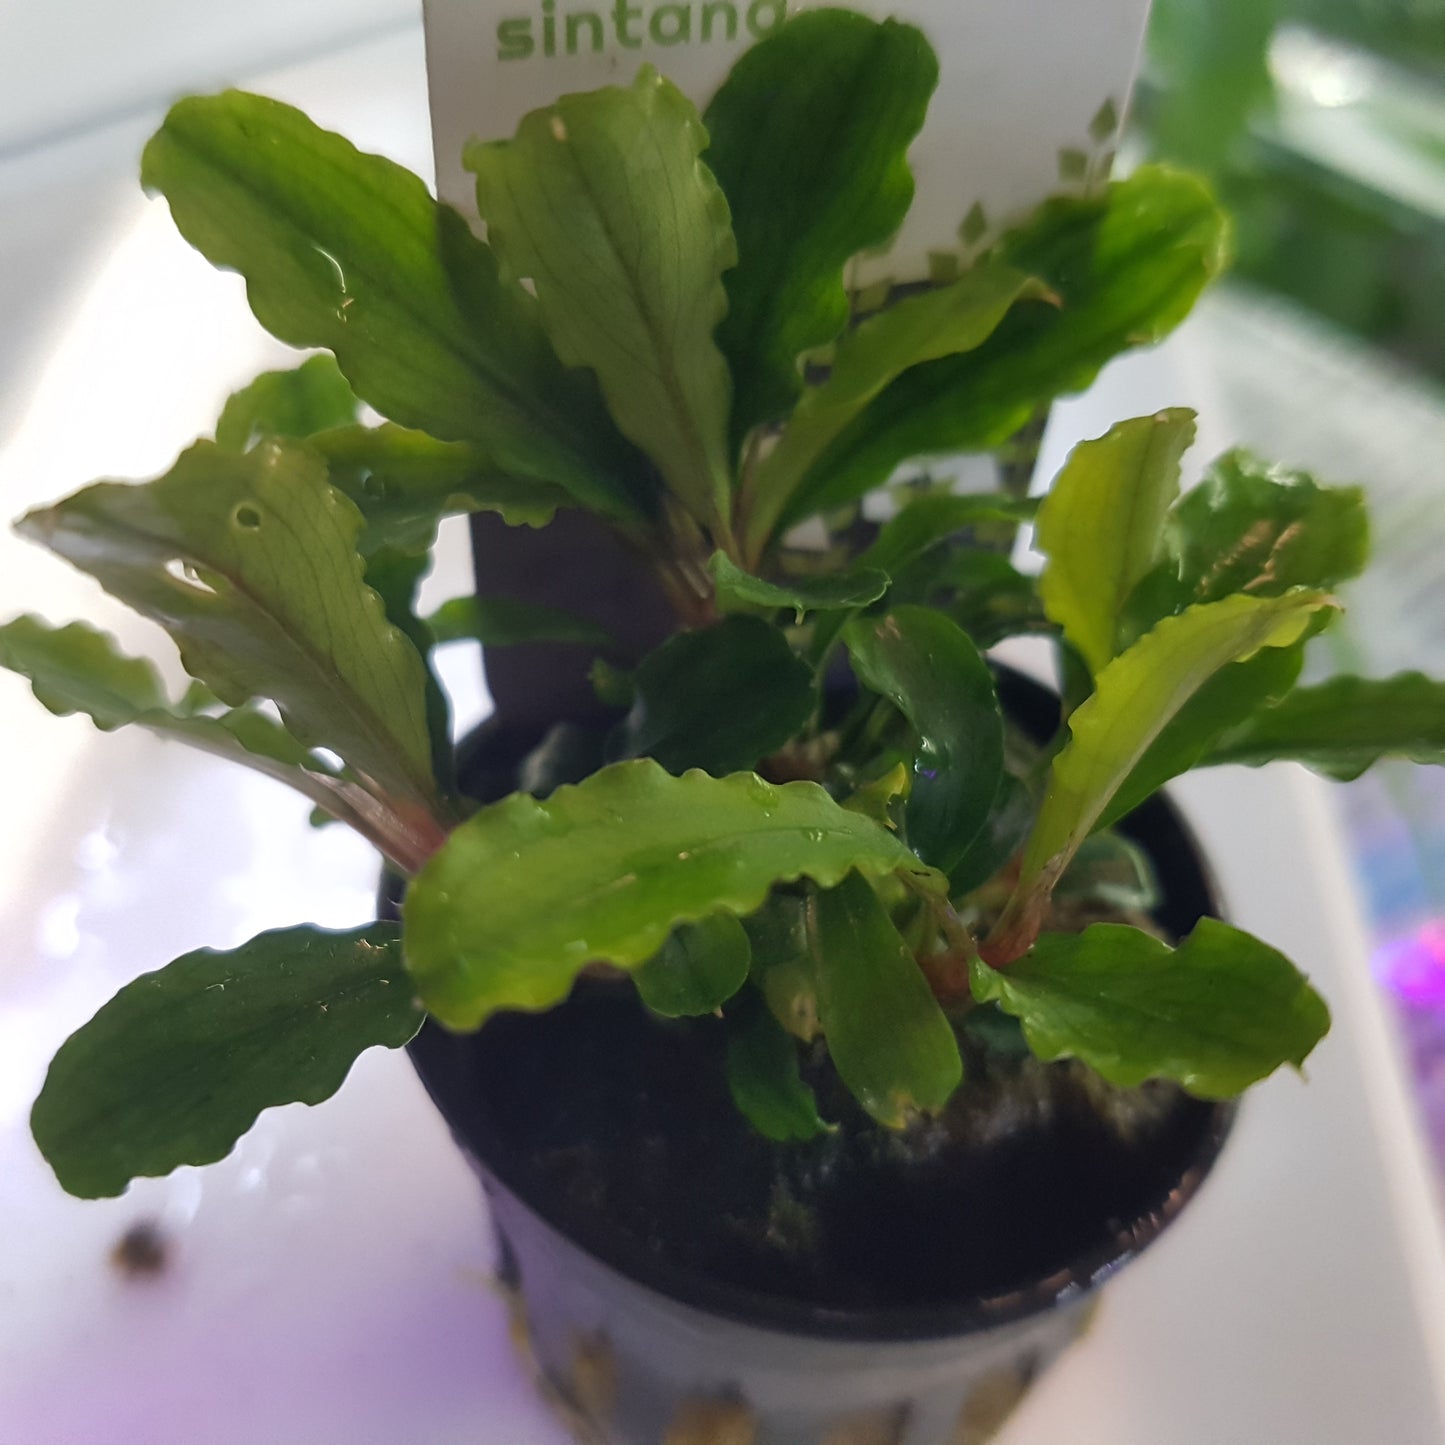 Bucephalandra sintang - 5cm pot - EU grown